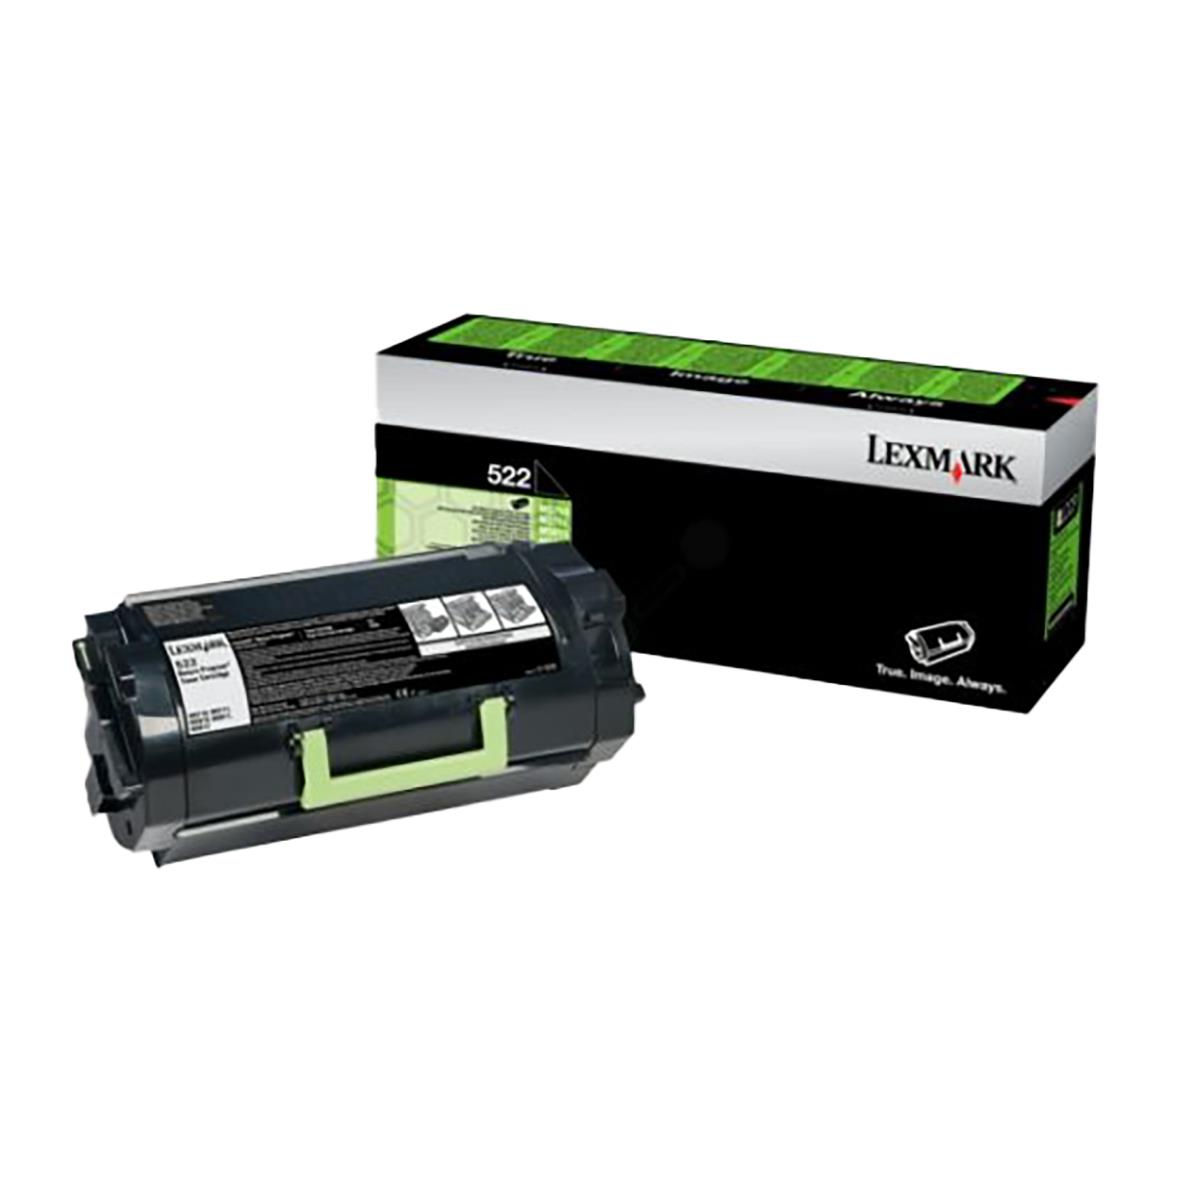 Lasertoner Lexmark 45000 Sidor 52D2X00 Svart